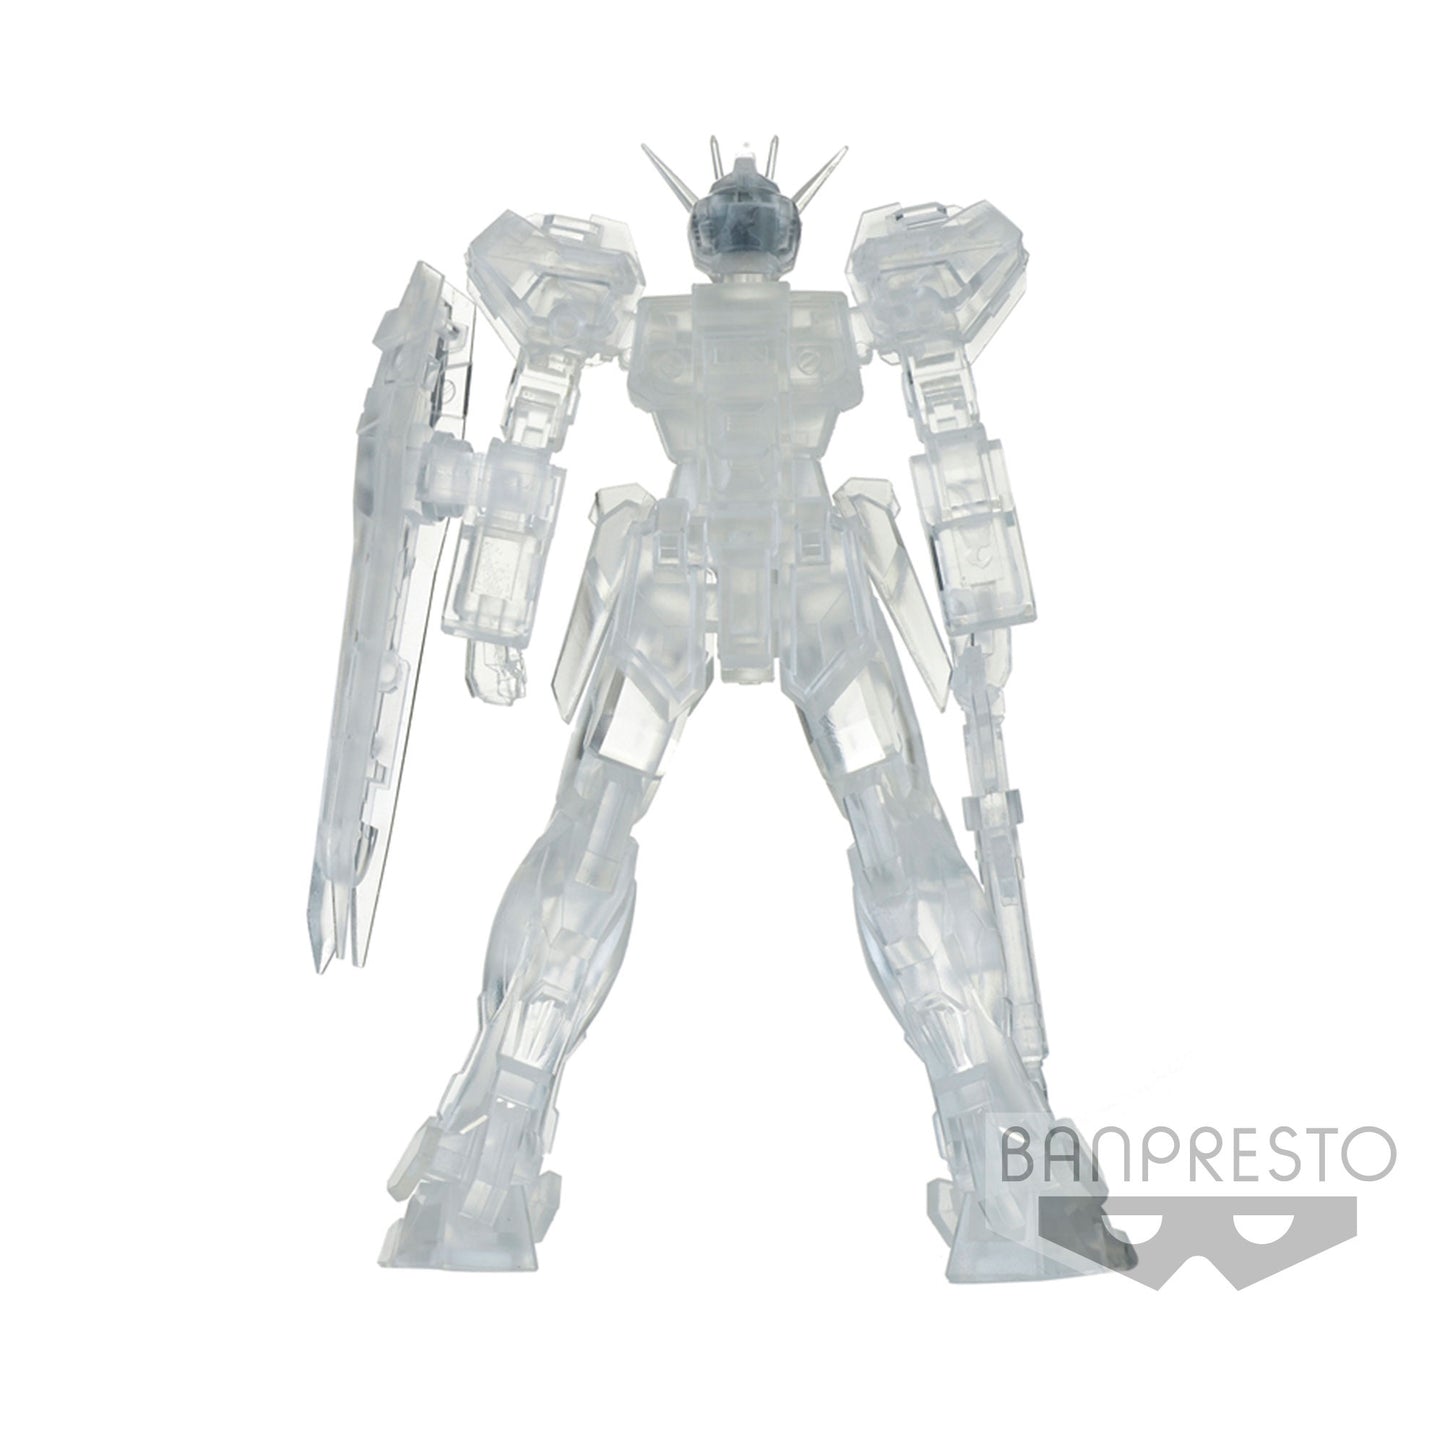 MOBILE SUIT GUNDAM - GAT-X105 Strike Gundam Weapon Ver B Banpresto Figure